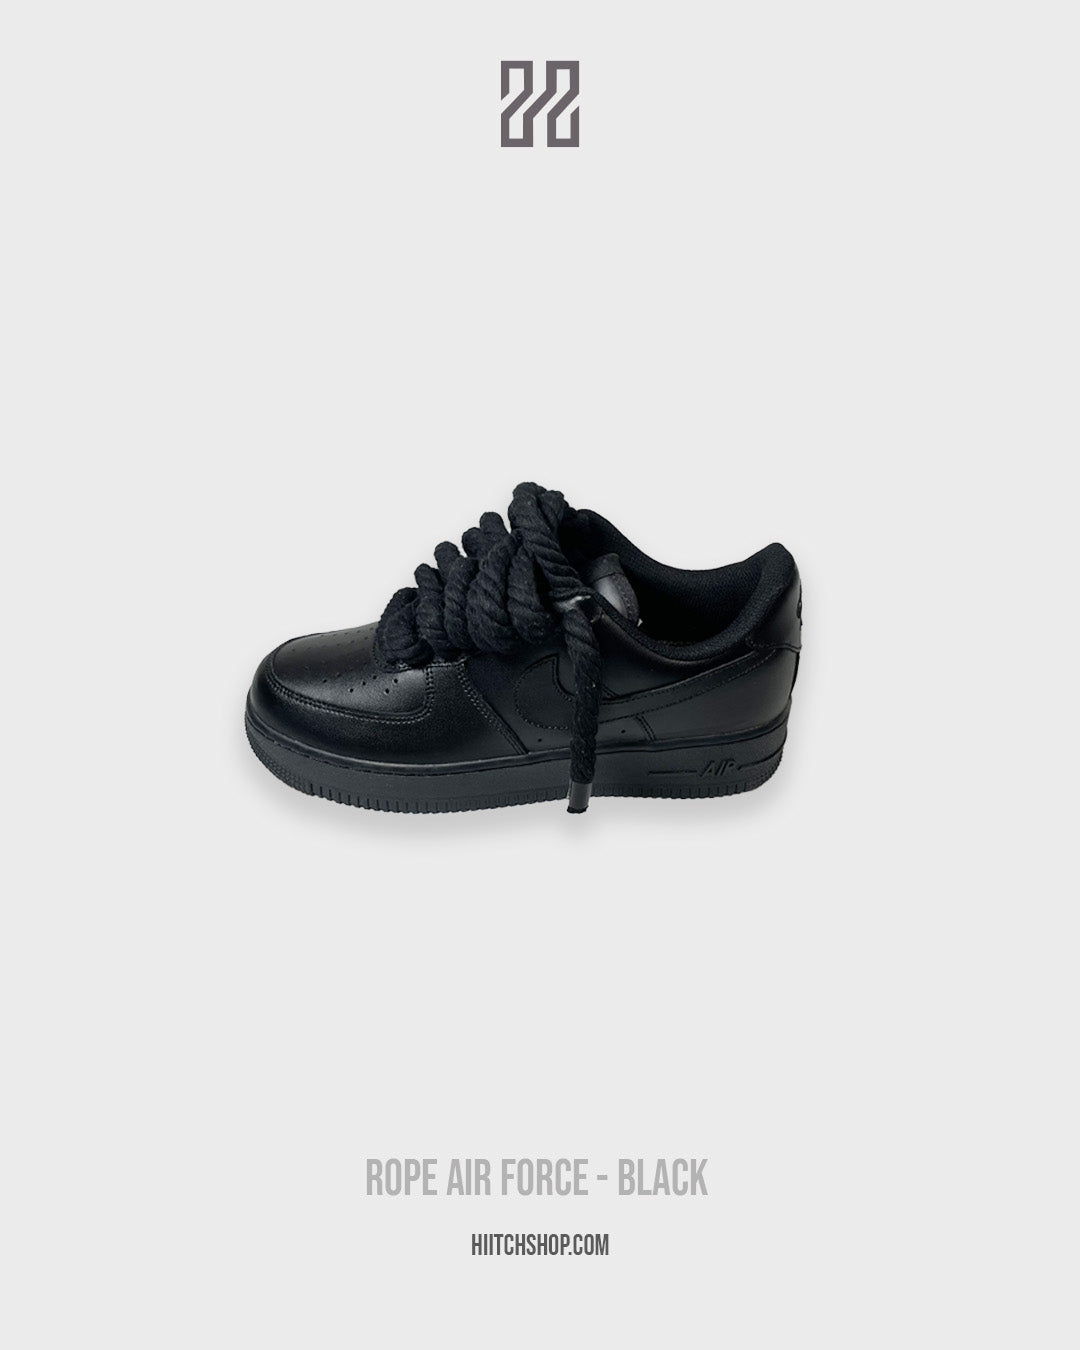 Rope Air Force 1 - Black